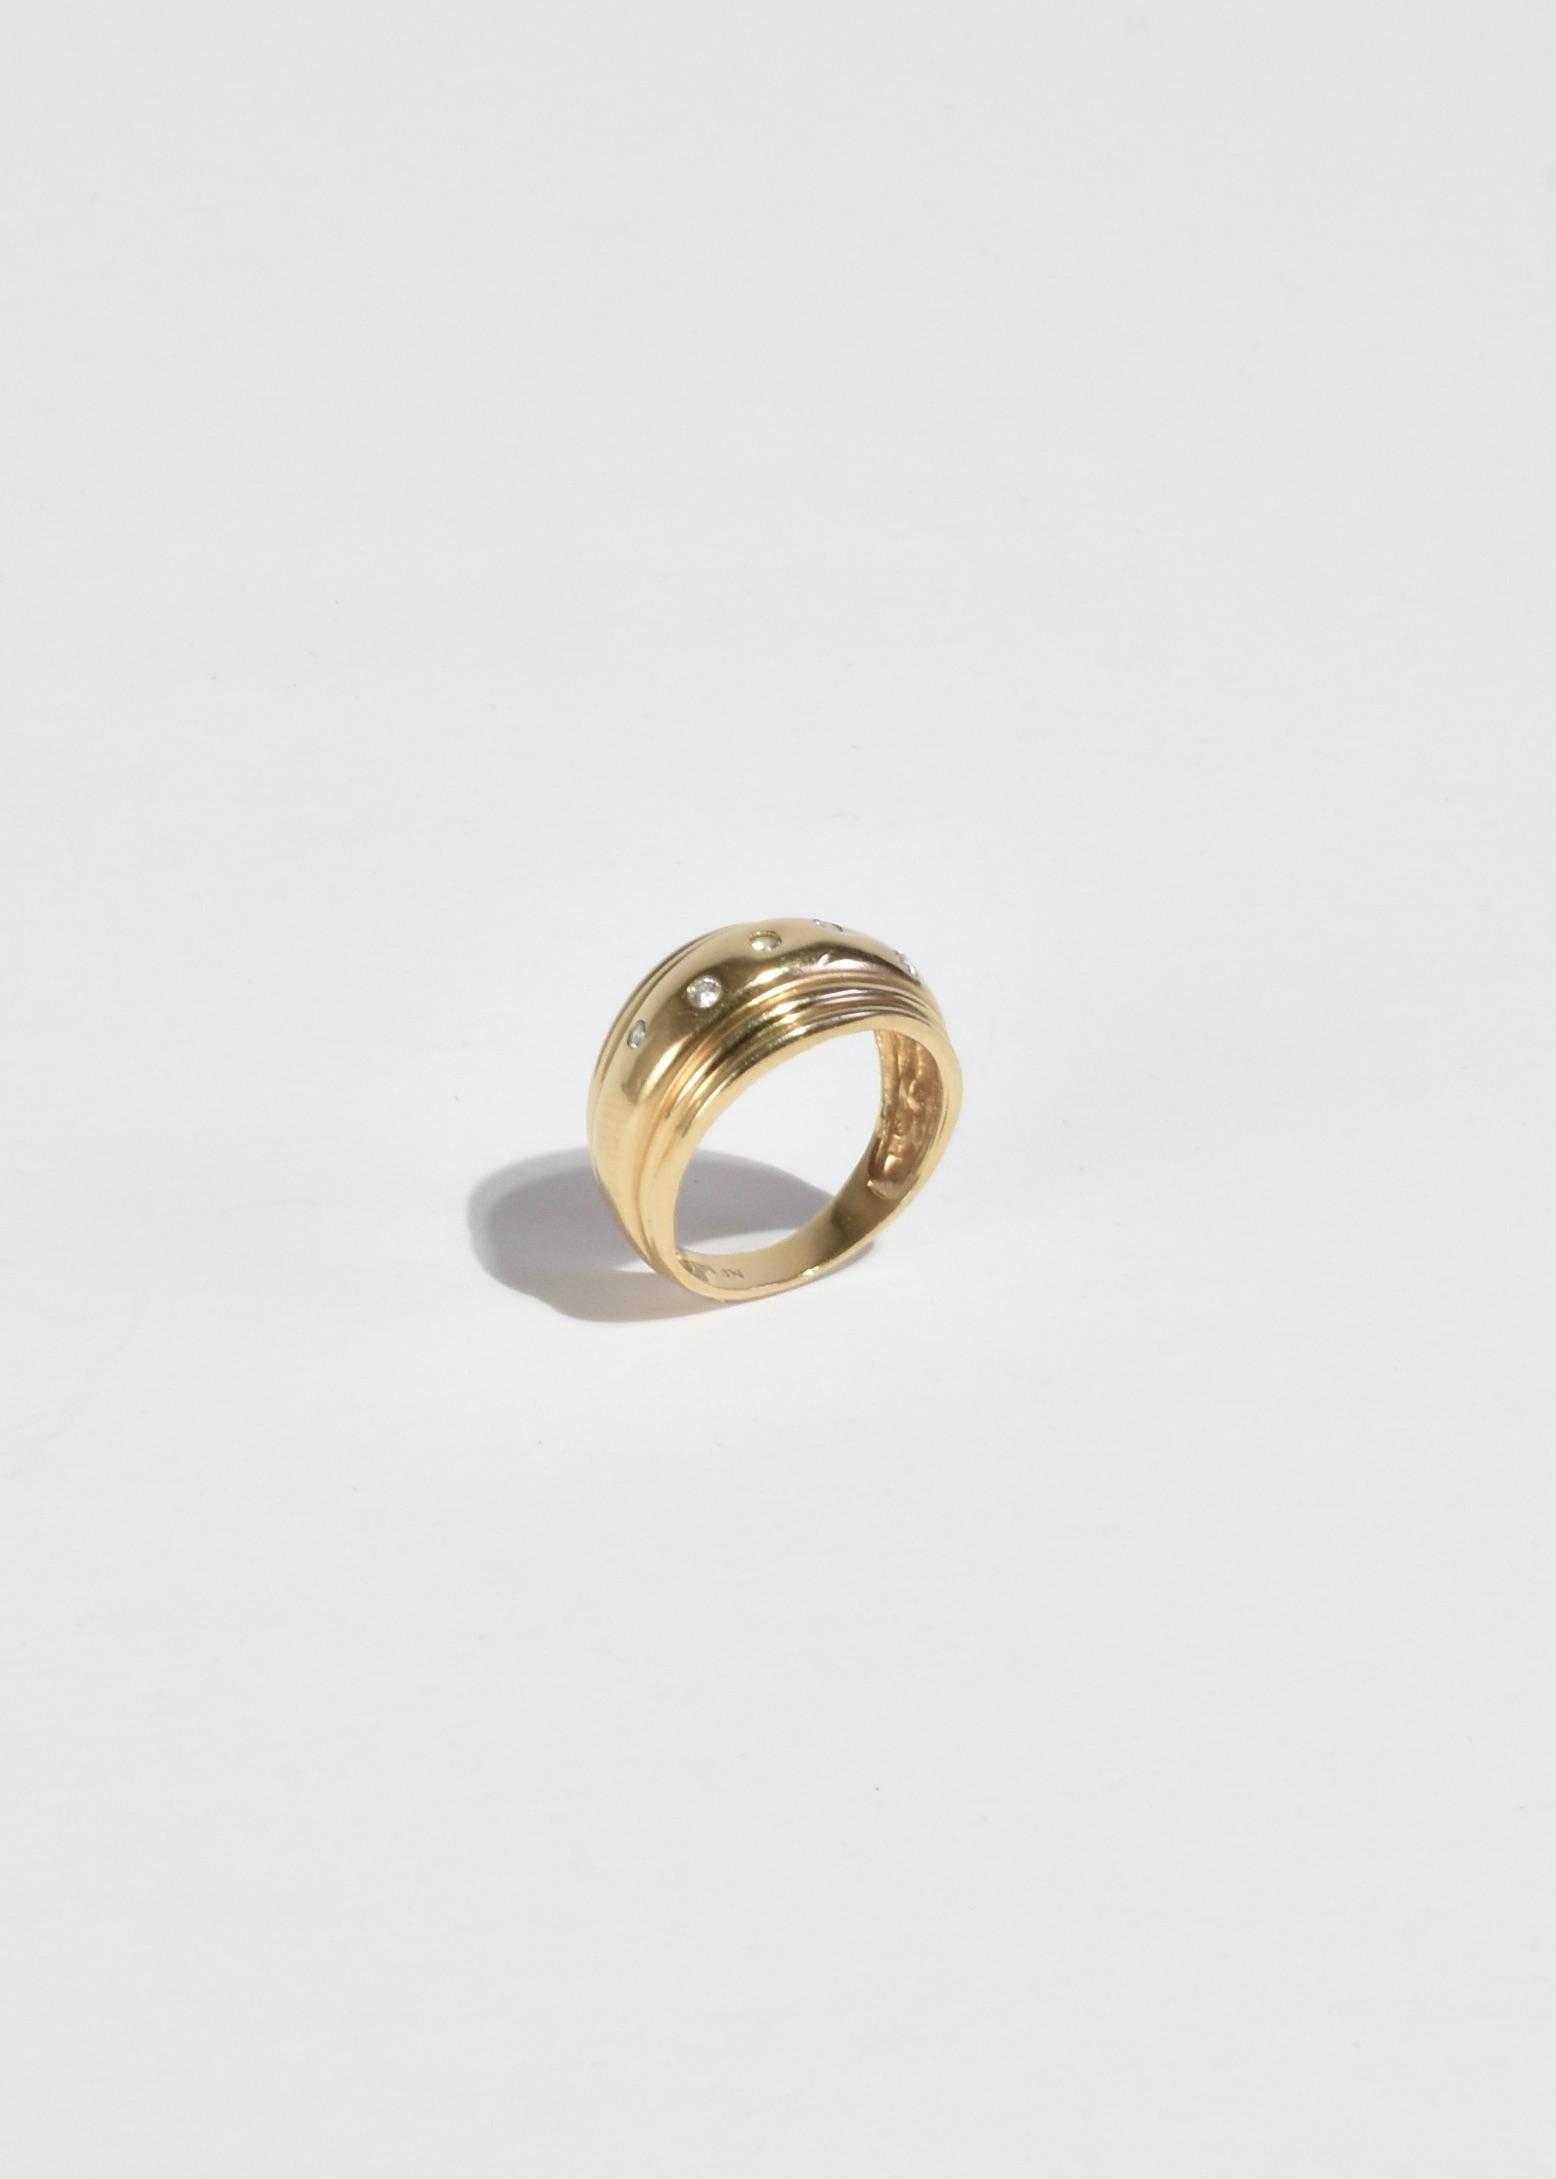 Gold Diamond Ring In Good Condition For Sale In Richmond, VA